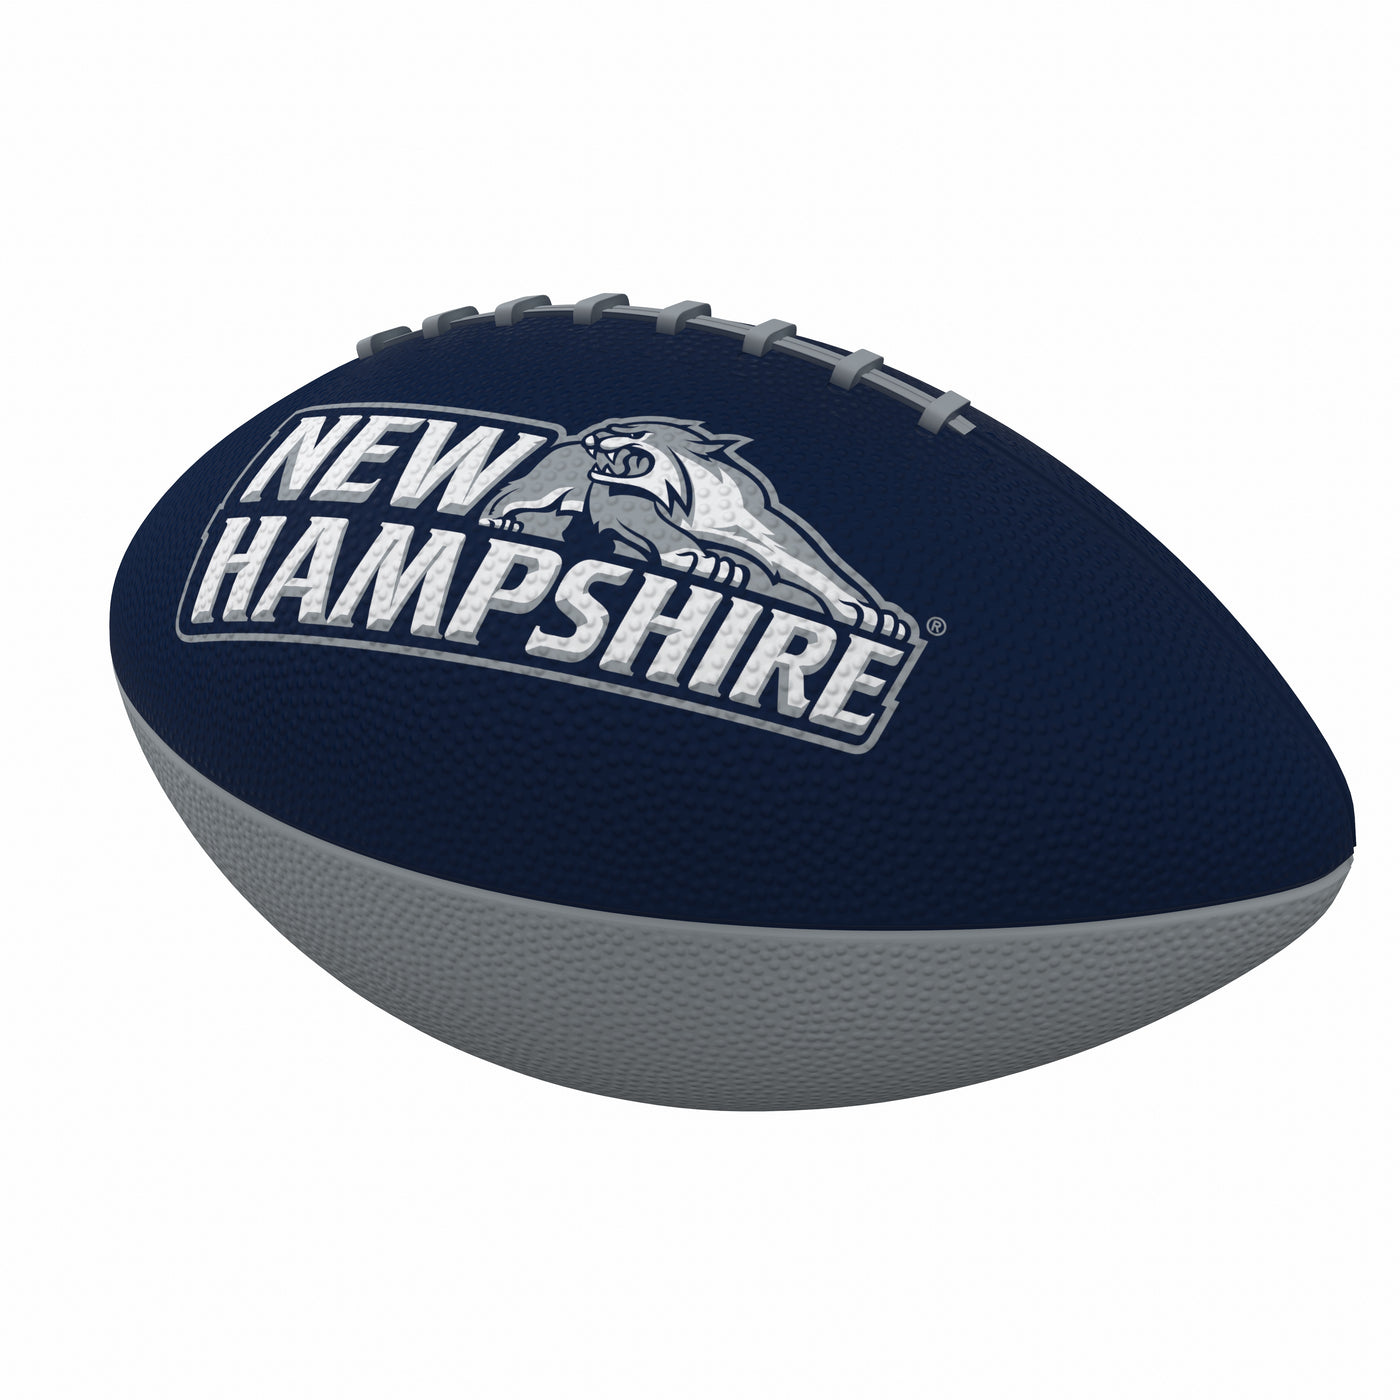 New Hampshire Junior-Size Rubber Football